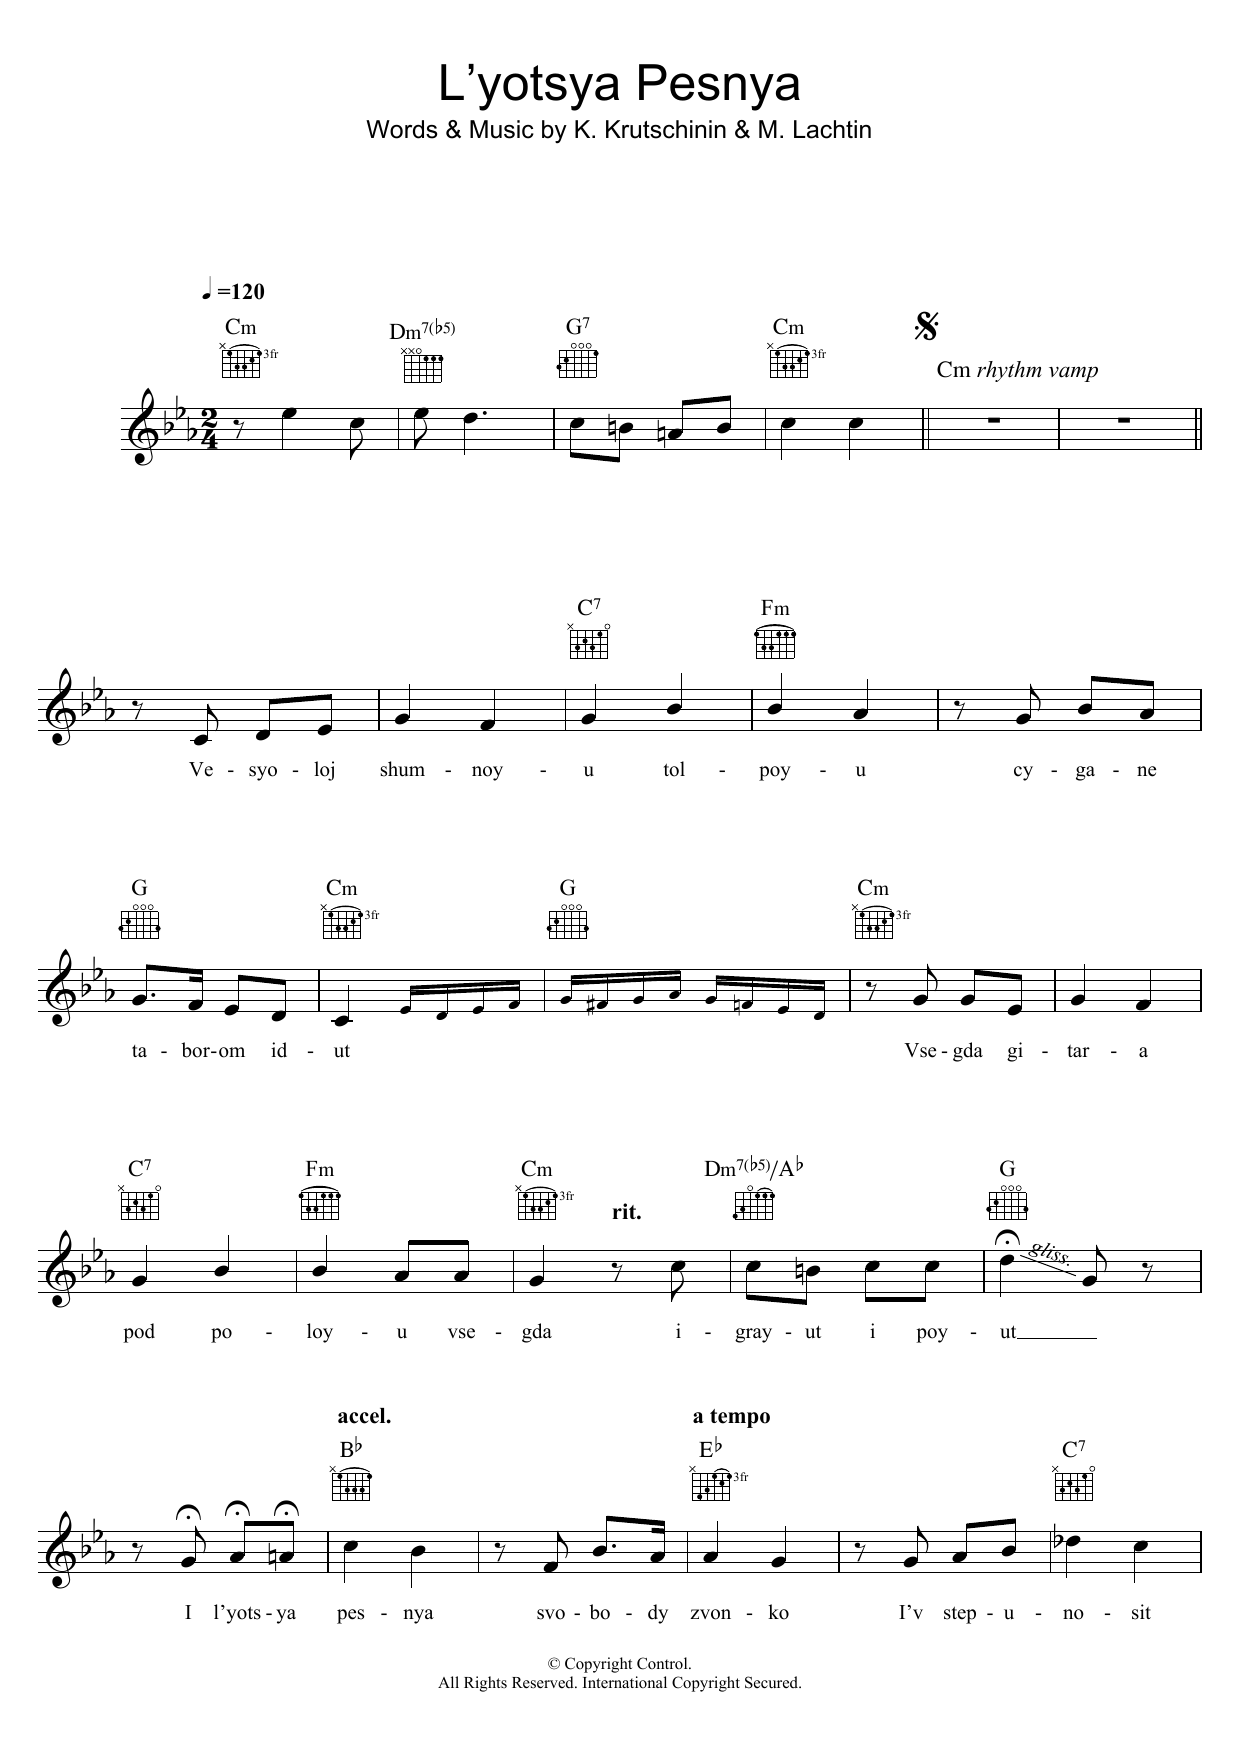 Pjotr Leschenko L'yotsya Pesnya Sheet Music Notes & Chords for Melody Line, Lyrics & Chords - Download or Print PDF